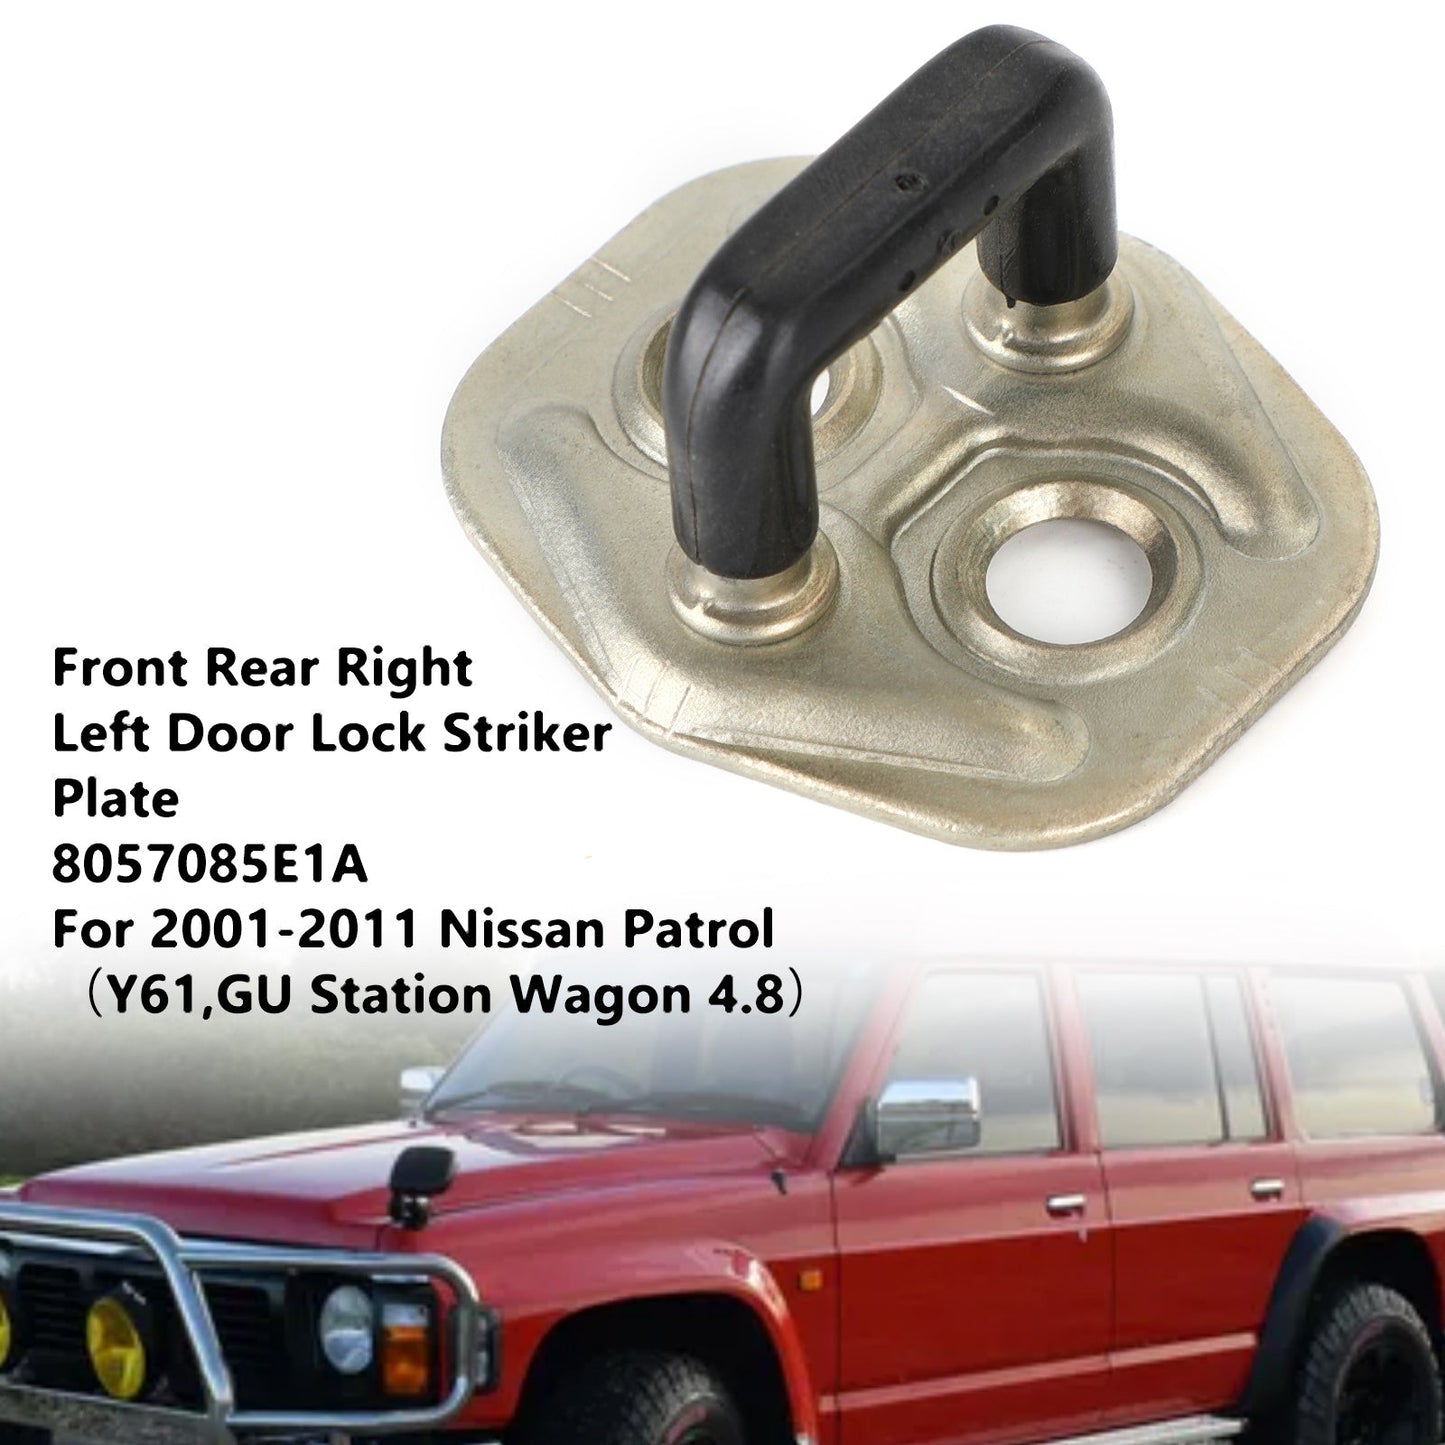 Front Rear Right Left Door Lock Striker Plate For Nissan Patrol GU Y61 2001-2011